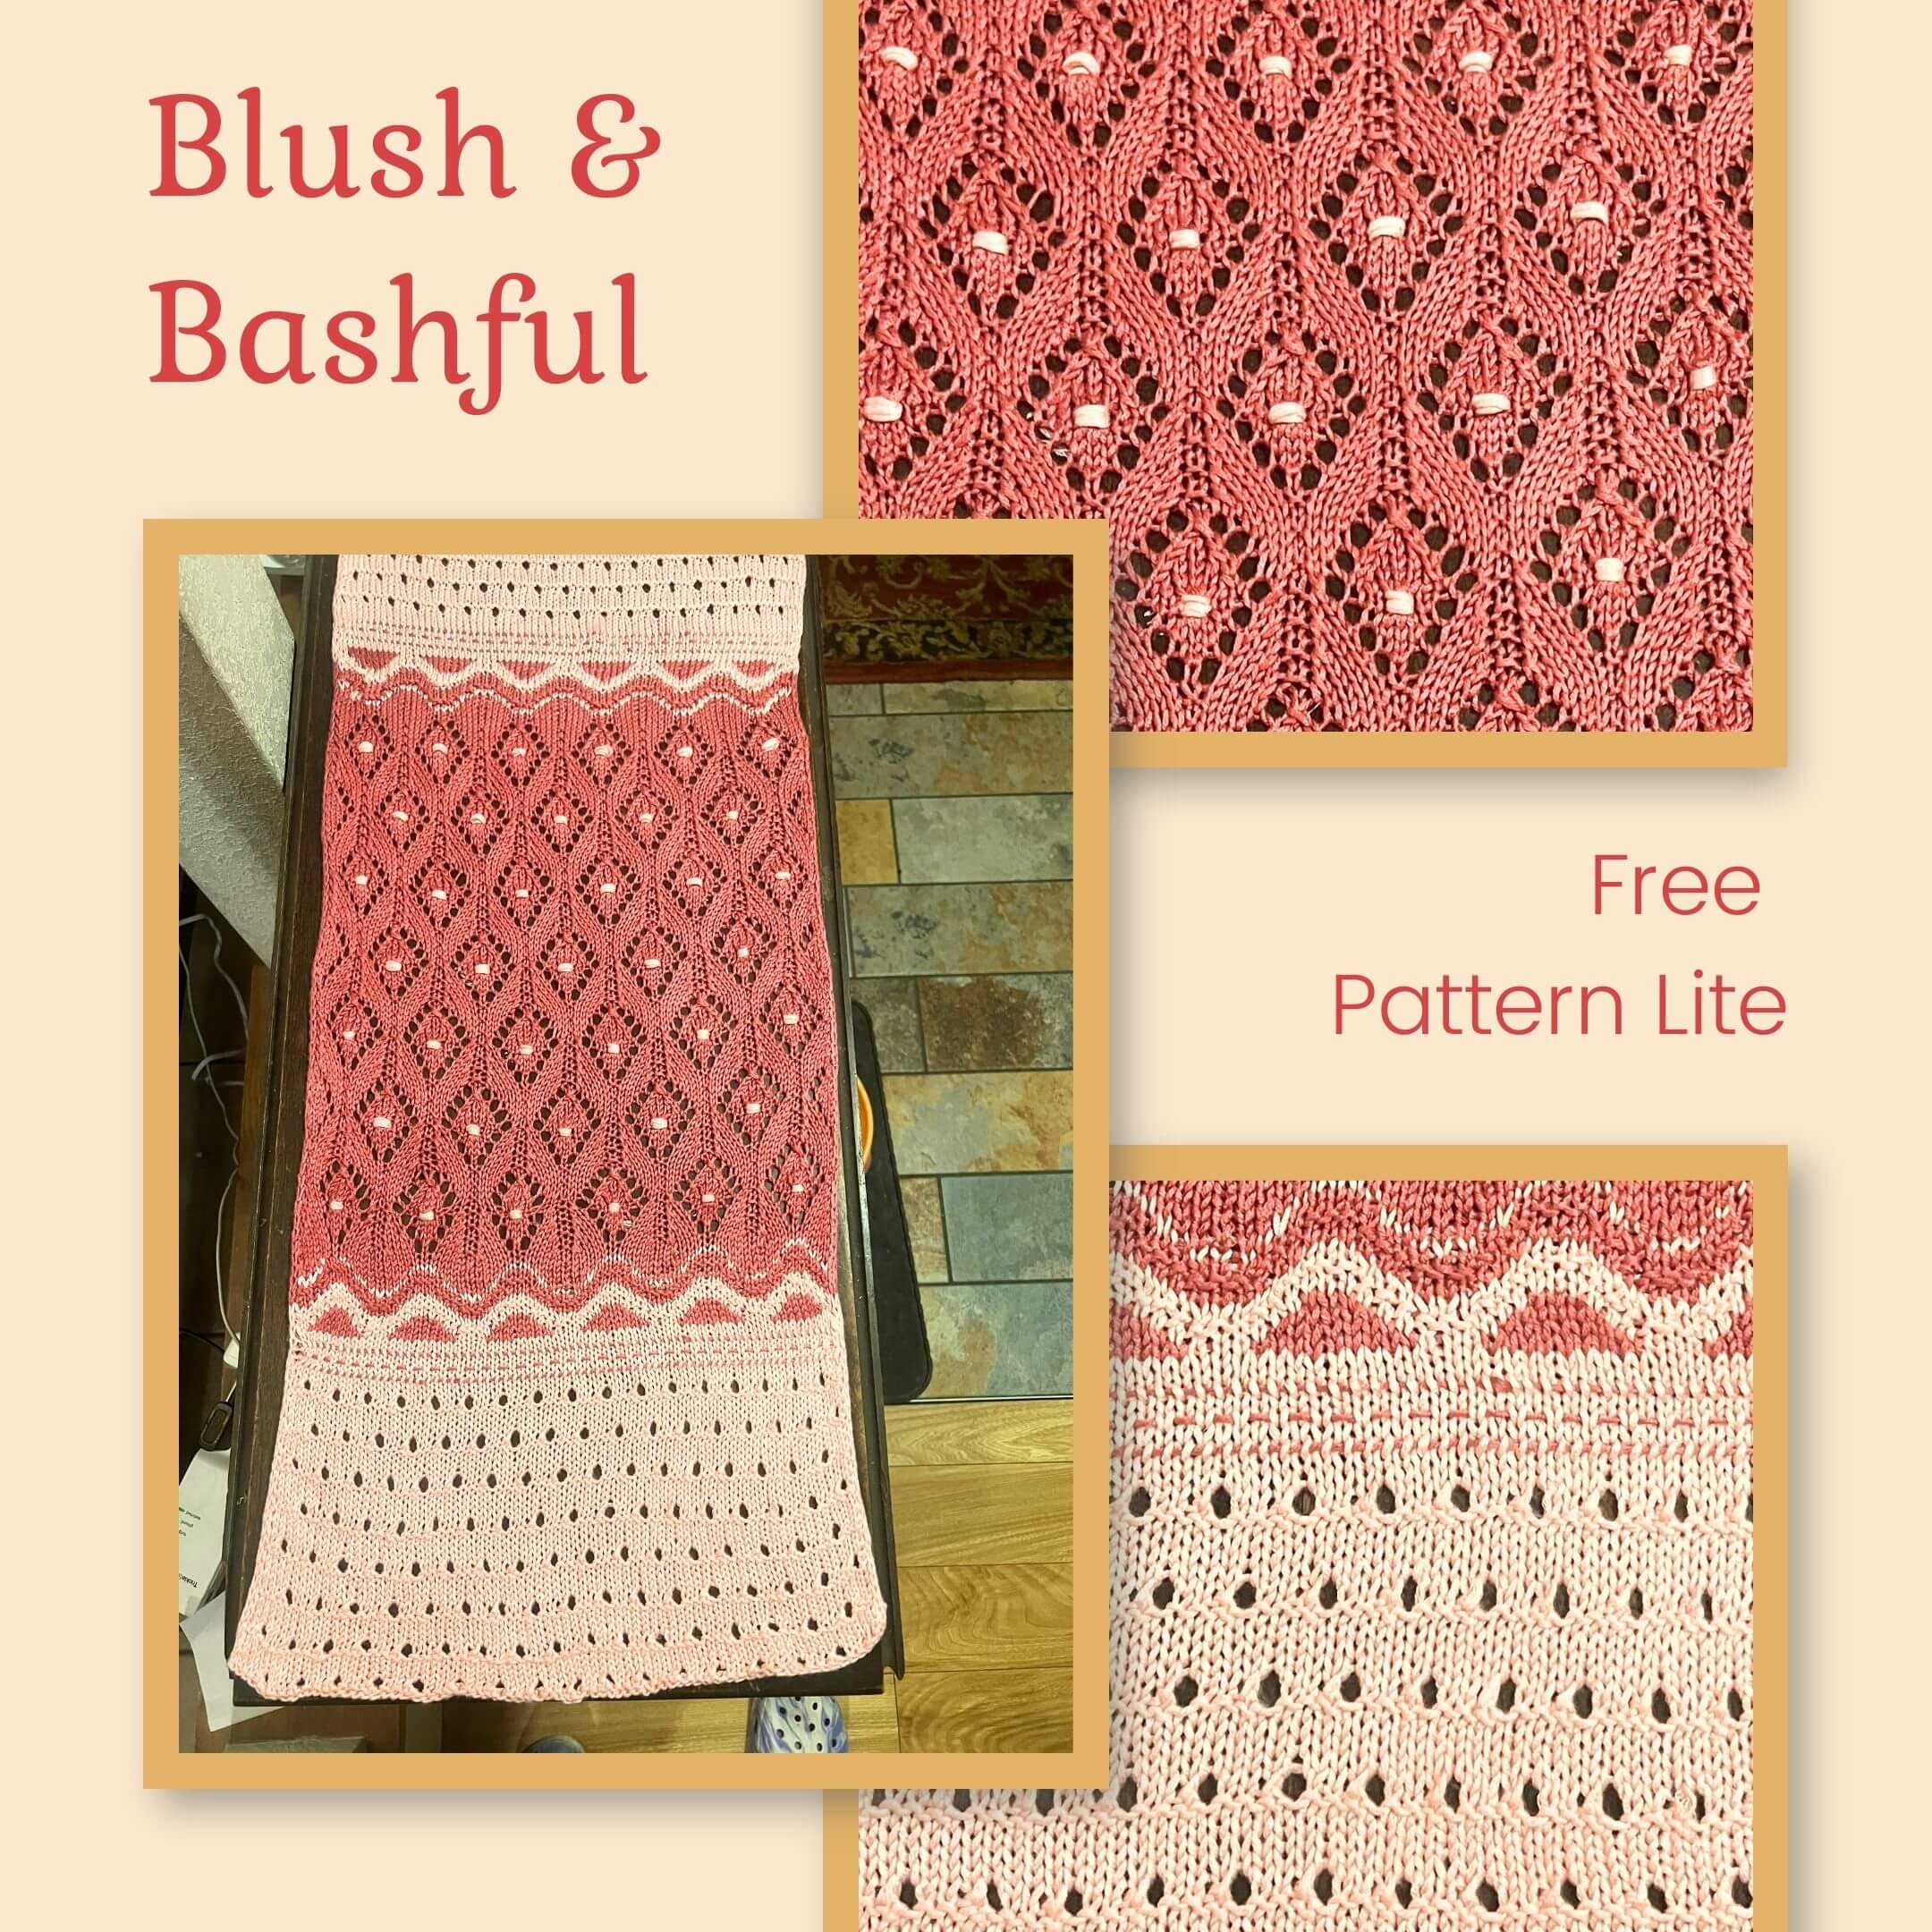 Knit Table Runner Free Pattern Lite: Blush and Bashful